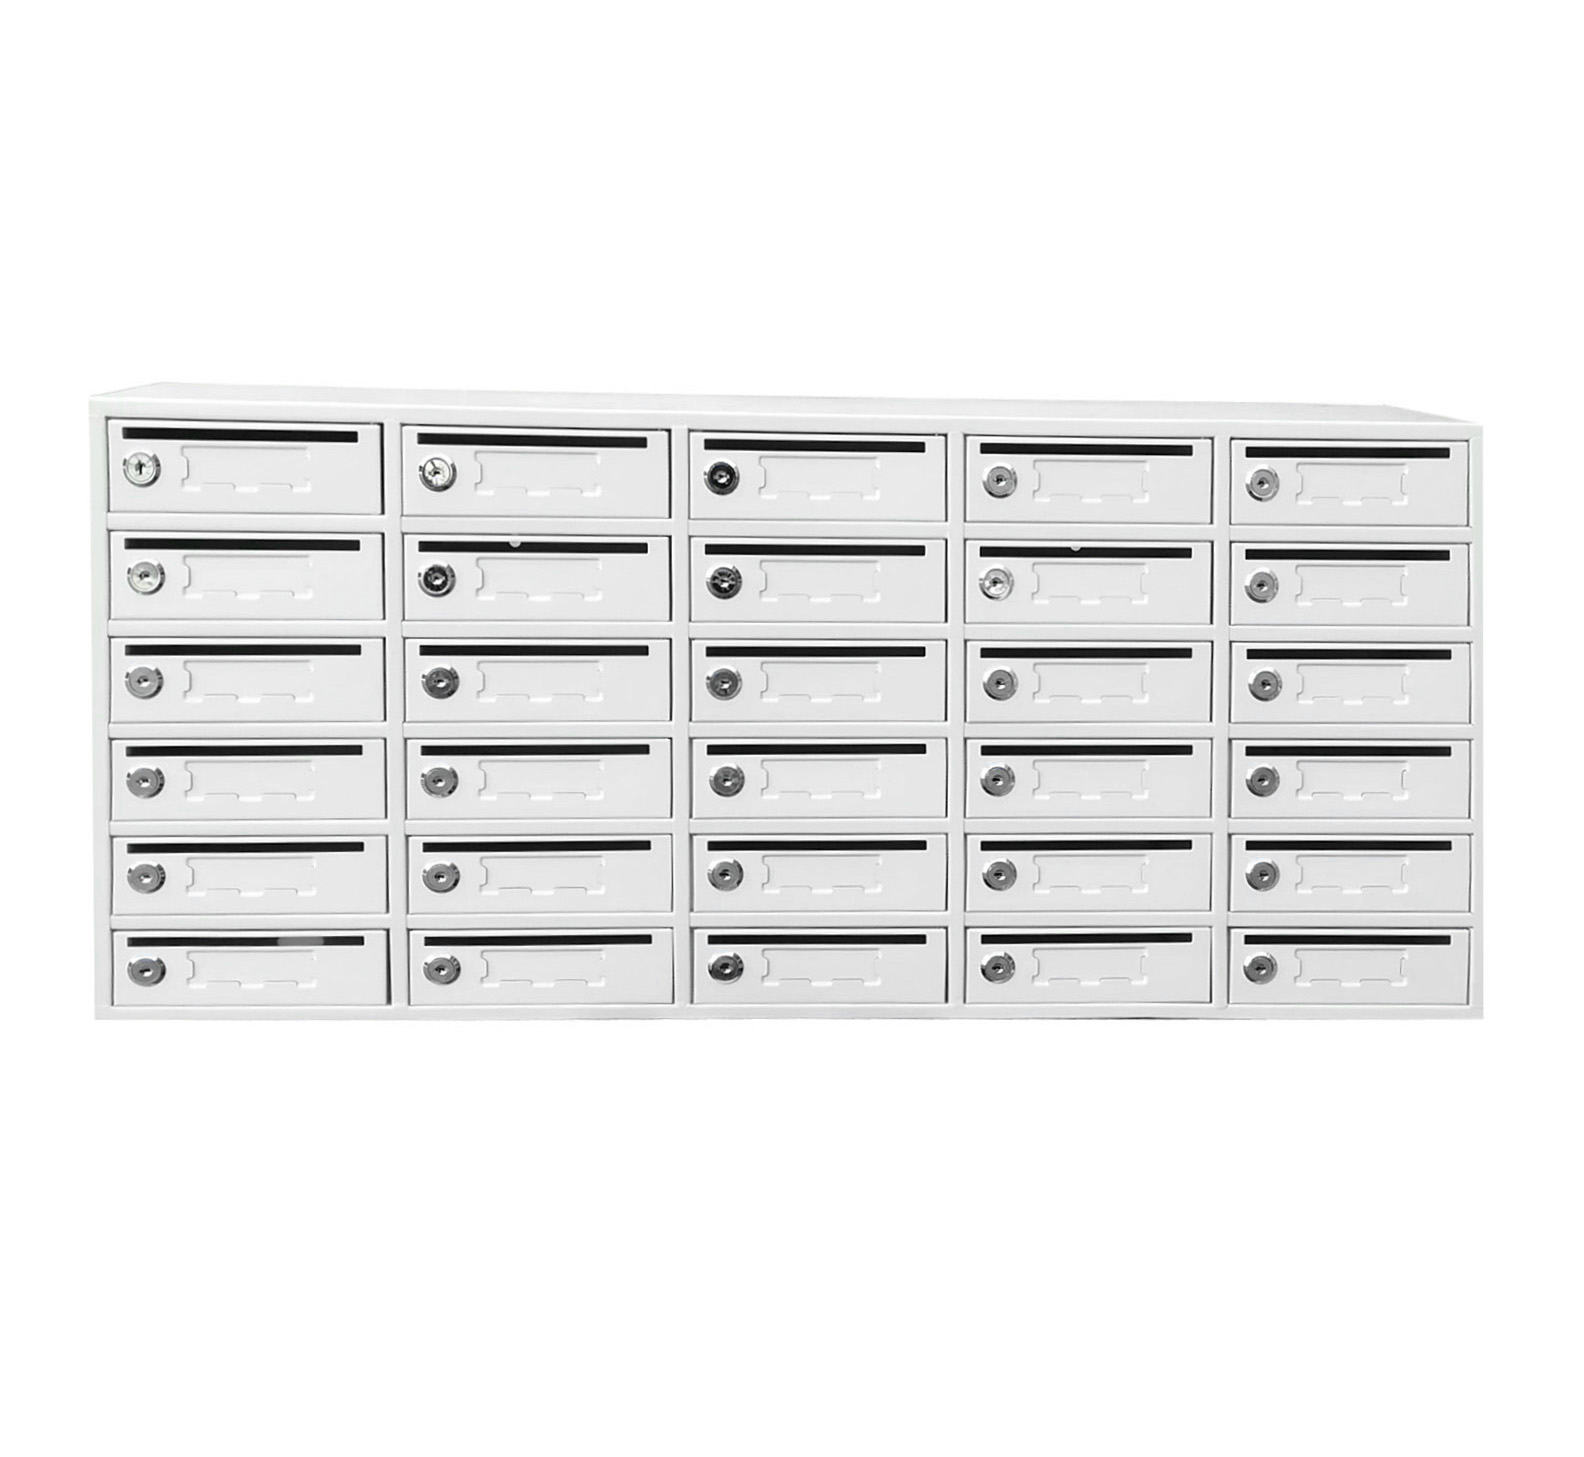 FixtureDisplays Cell Phone Locker STORAGE Station 5" Slot Assignment Cabinet Mail Slot Metal Box